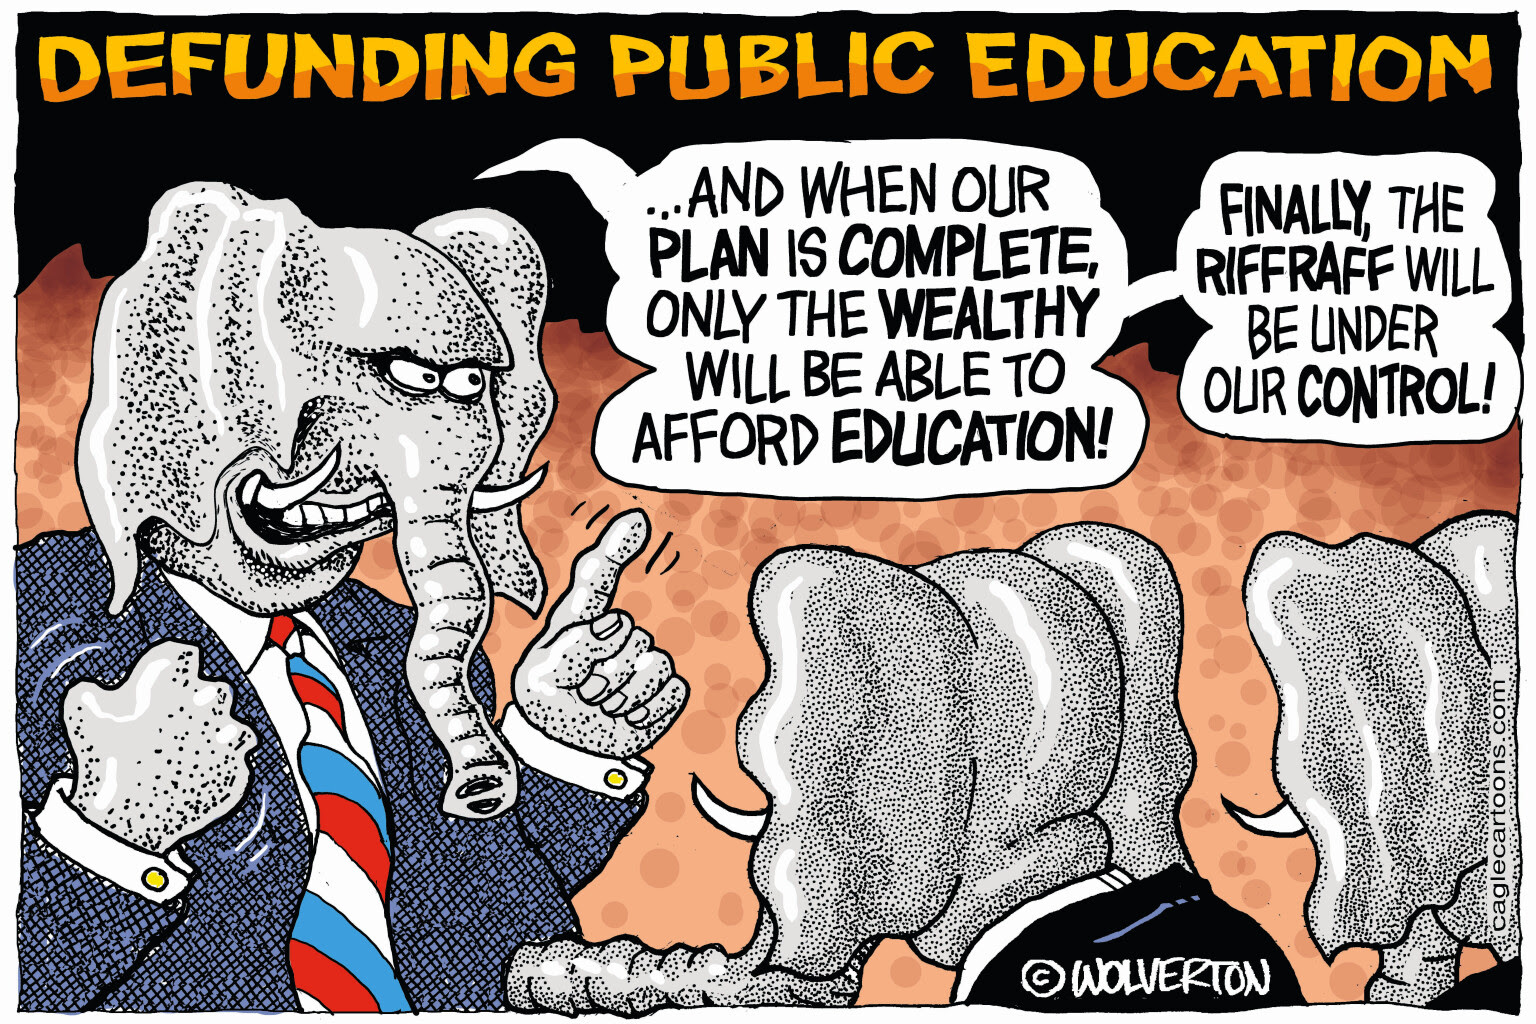 Republican cut public school funding and push religious extremism